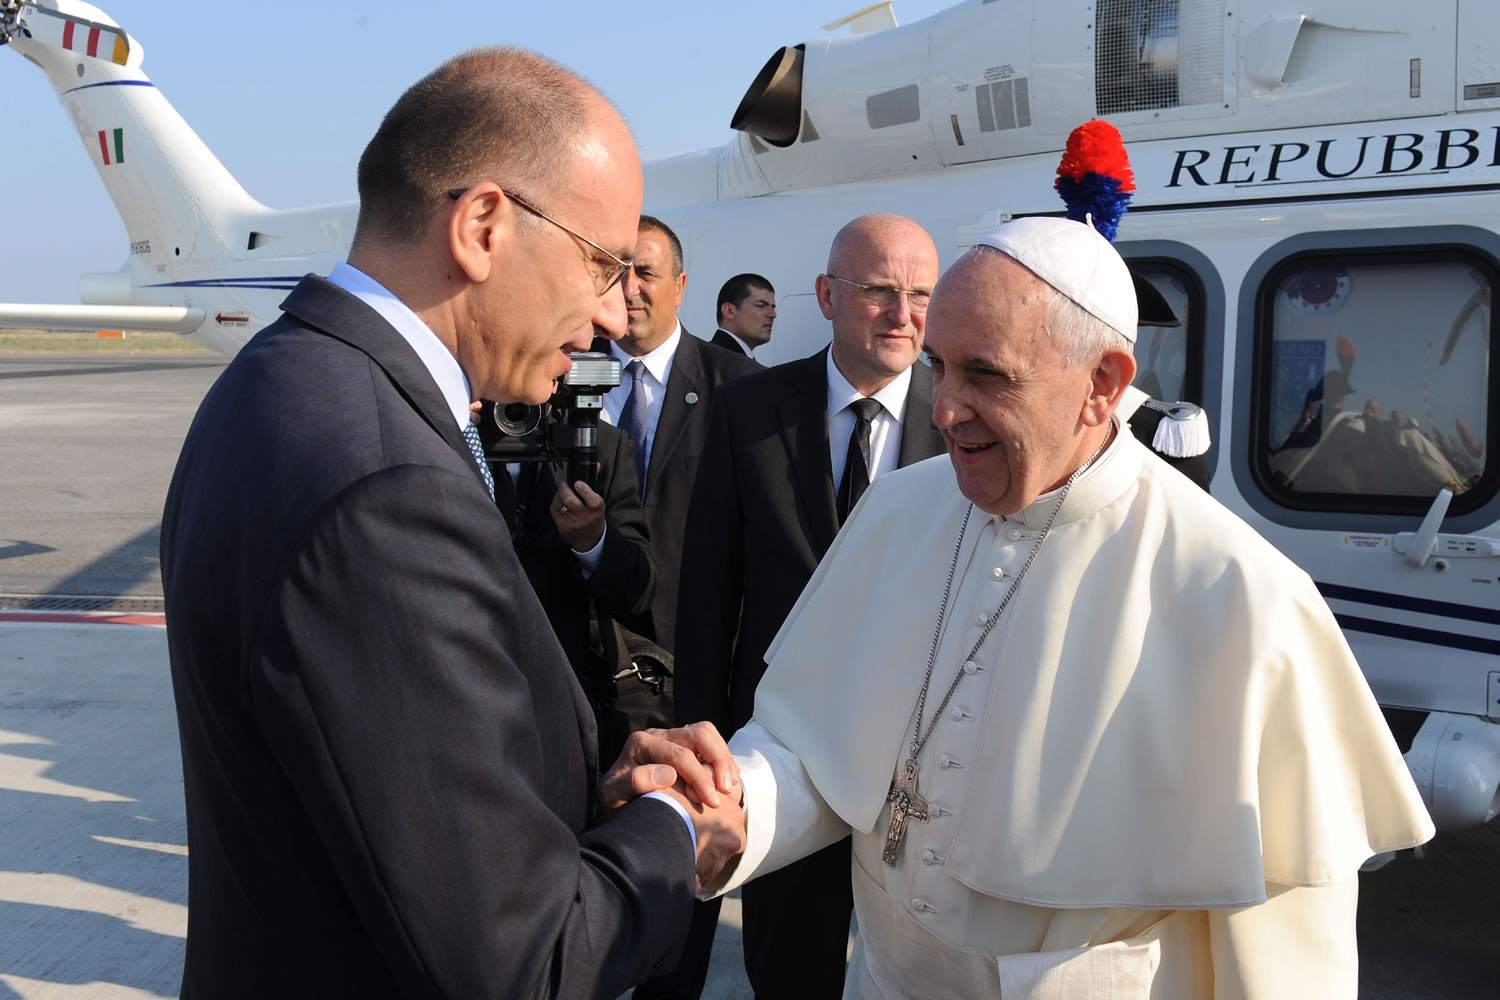 Pope Francis greets Italian Premier Enrico Letta at Rome's Leonardo Da Vinci international airport Monday.